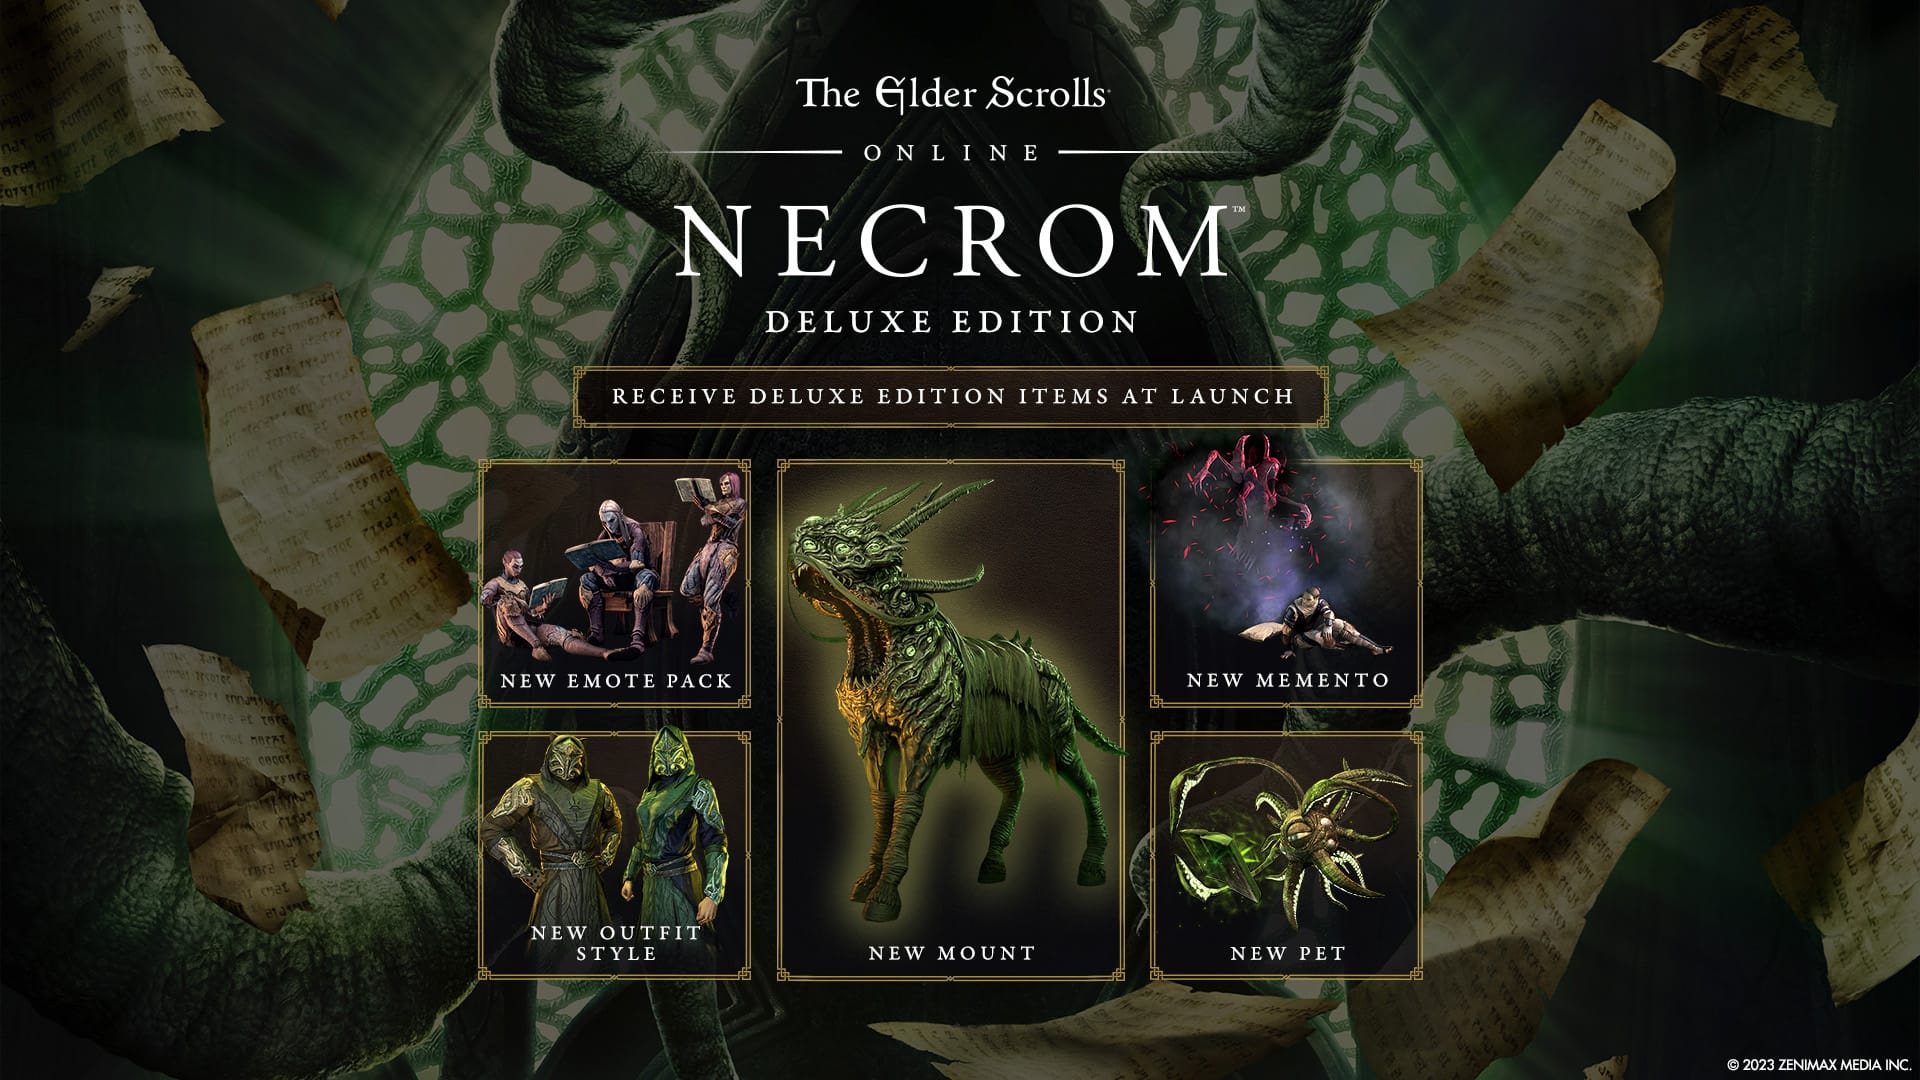 The Elder Scrolls Online Update 2.45 Released for Various Fixes This June 20